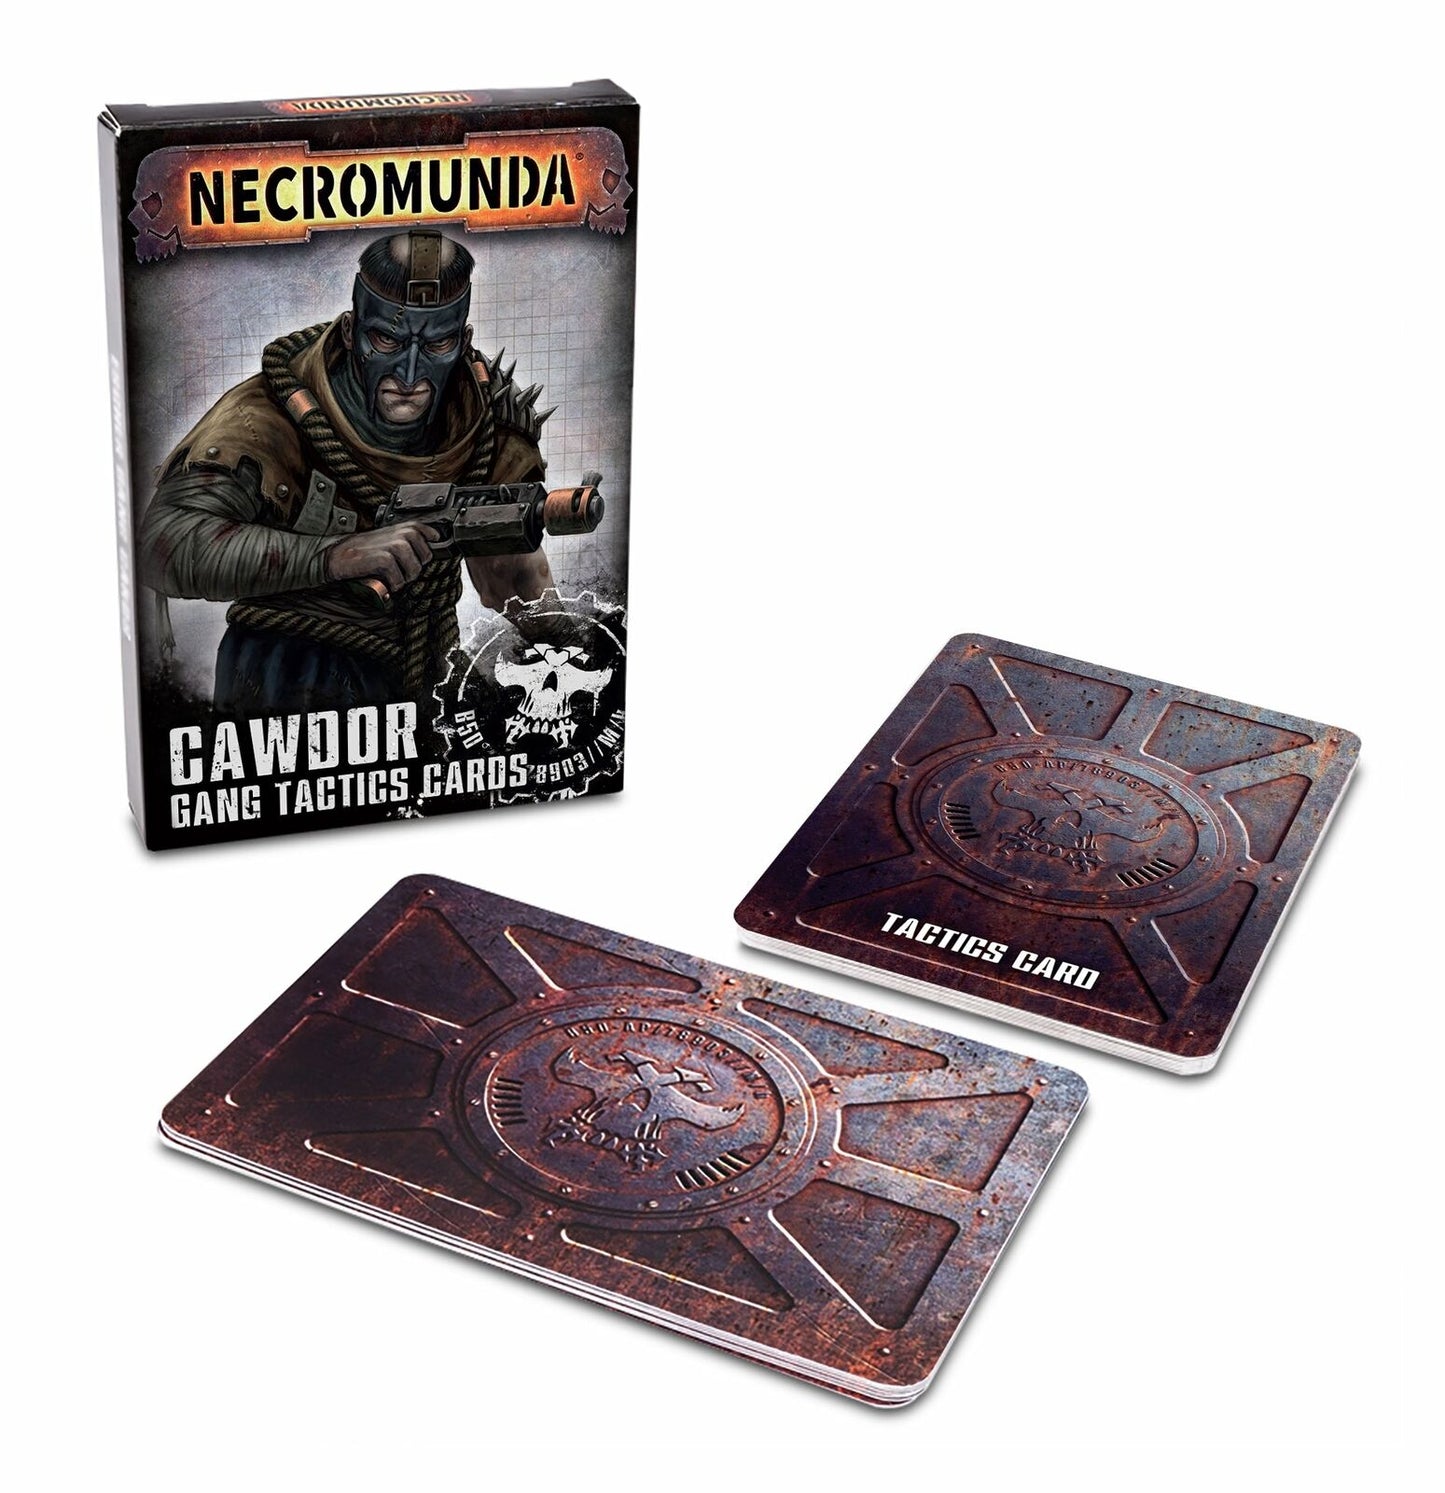 Necromunda: Cawdor: Gang Tactics Cards